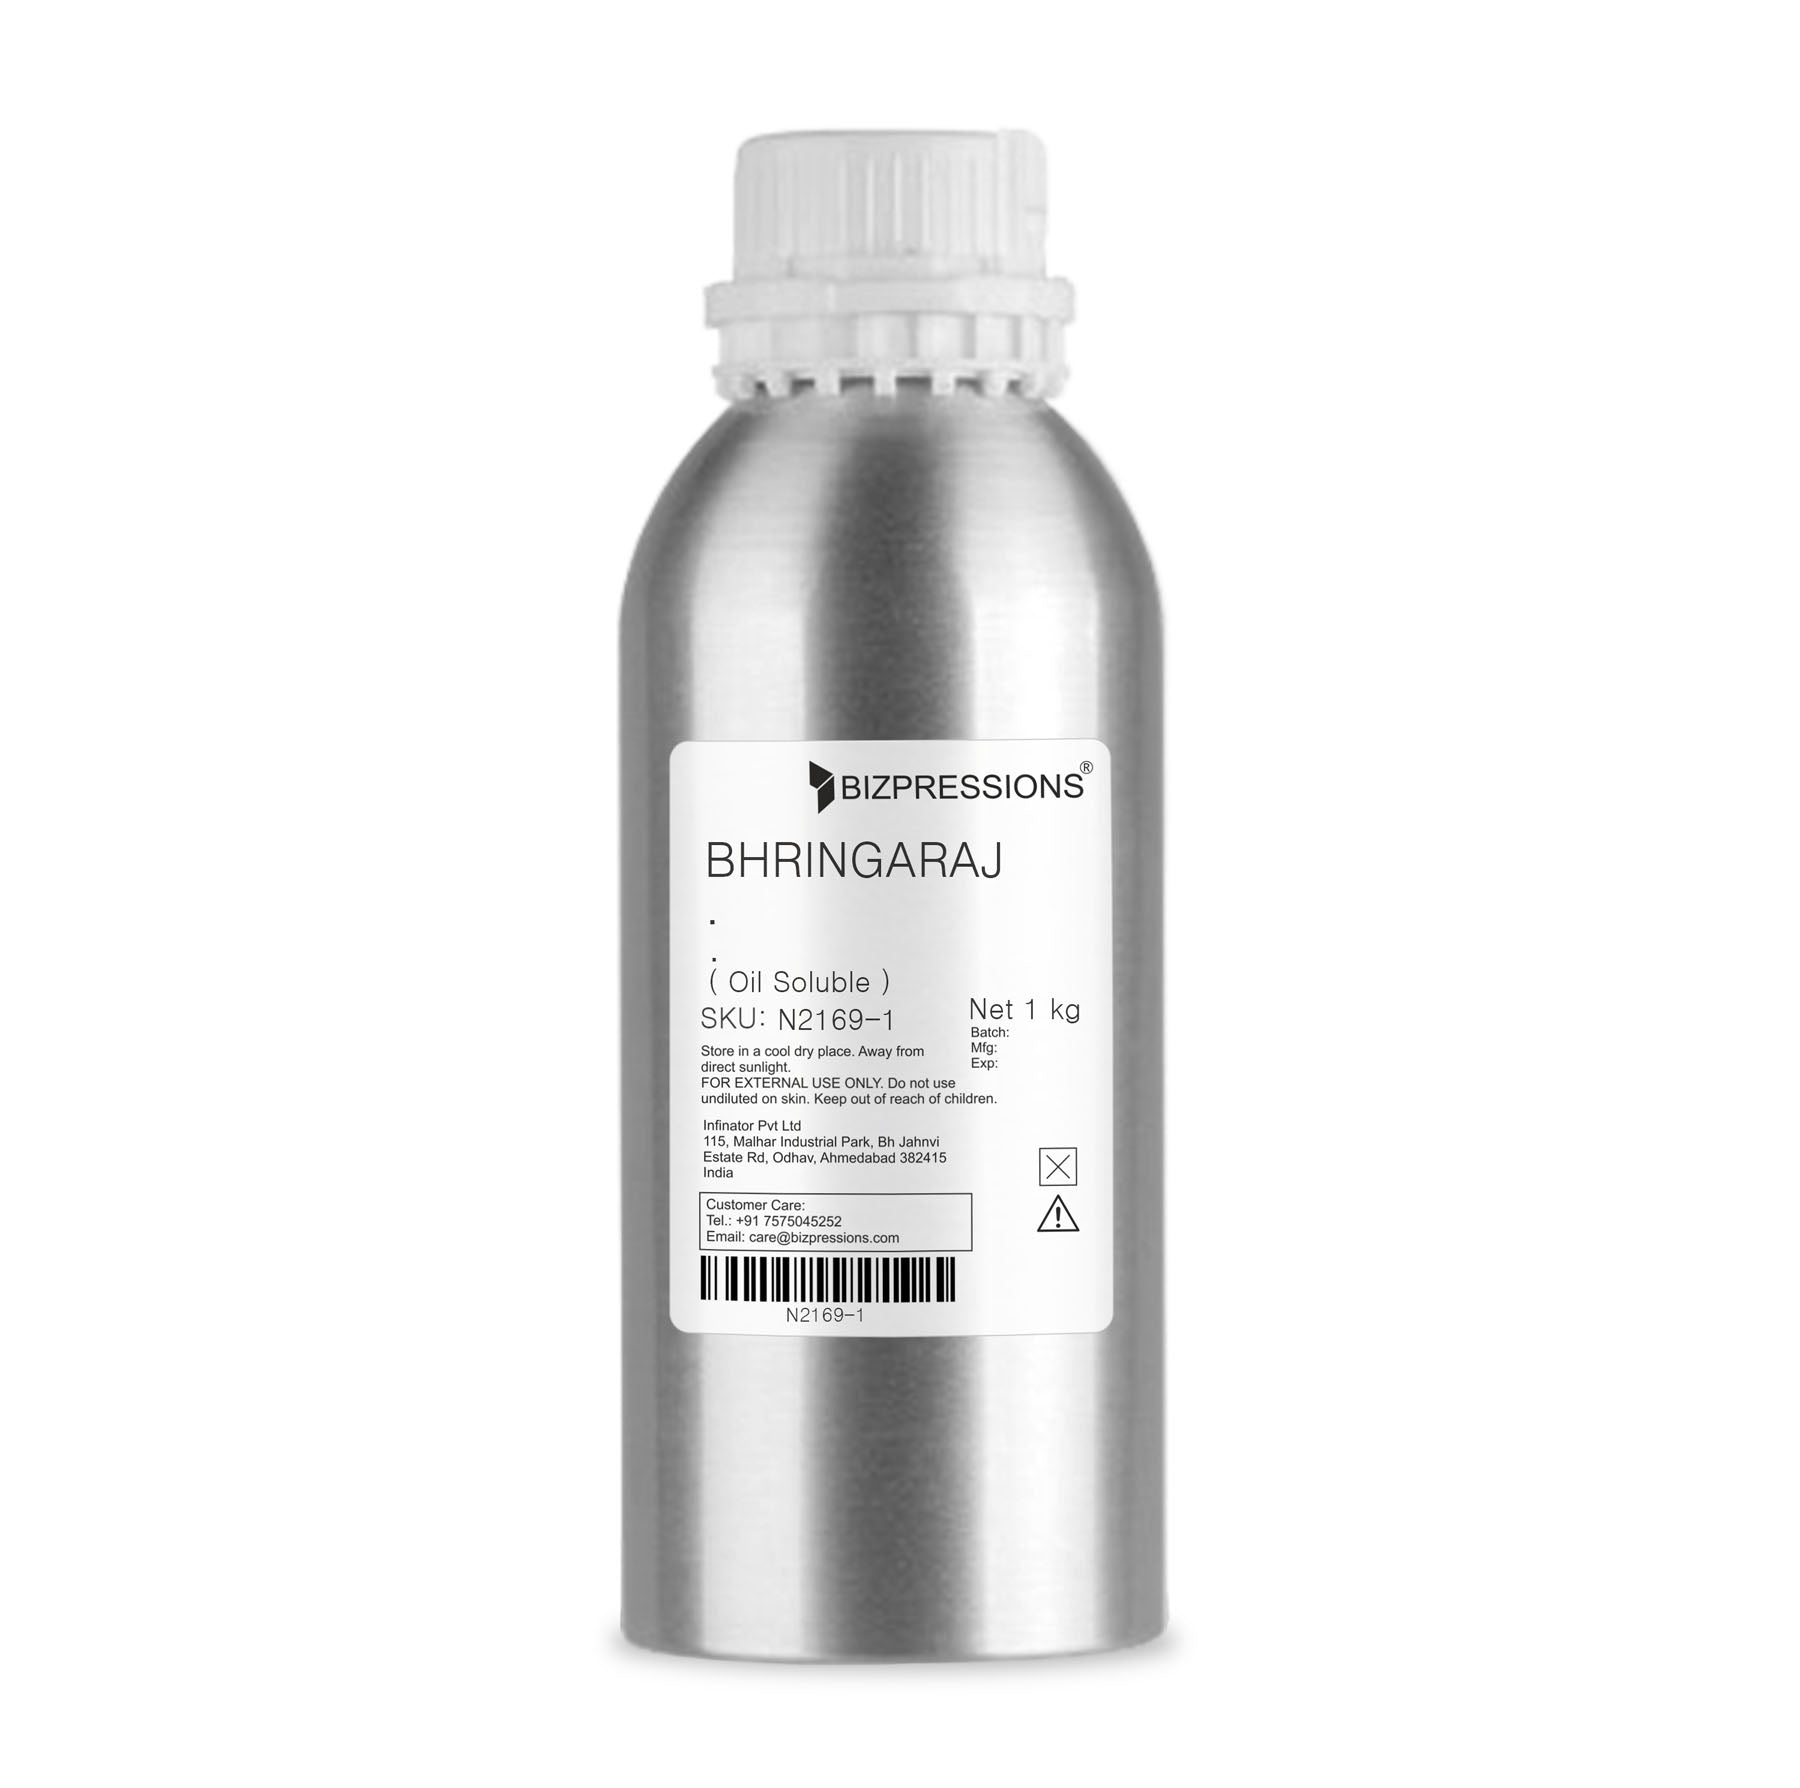 BHRINGARAJ - Fragrance ( Oil Soluble ) - 1 kg